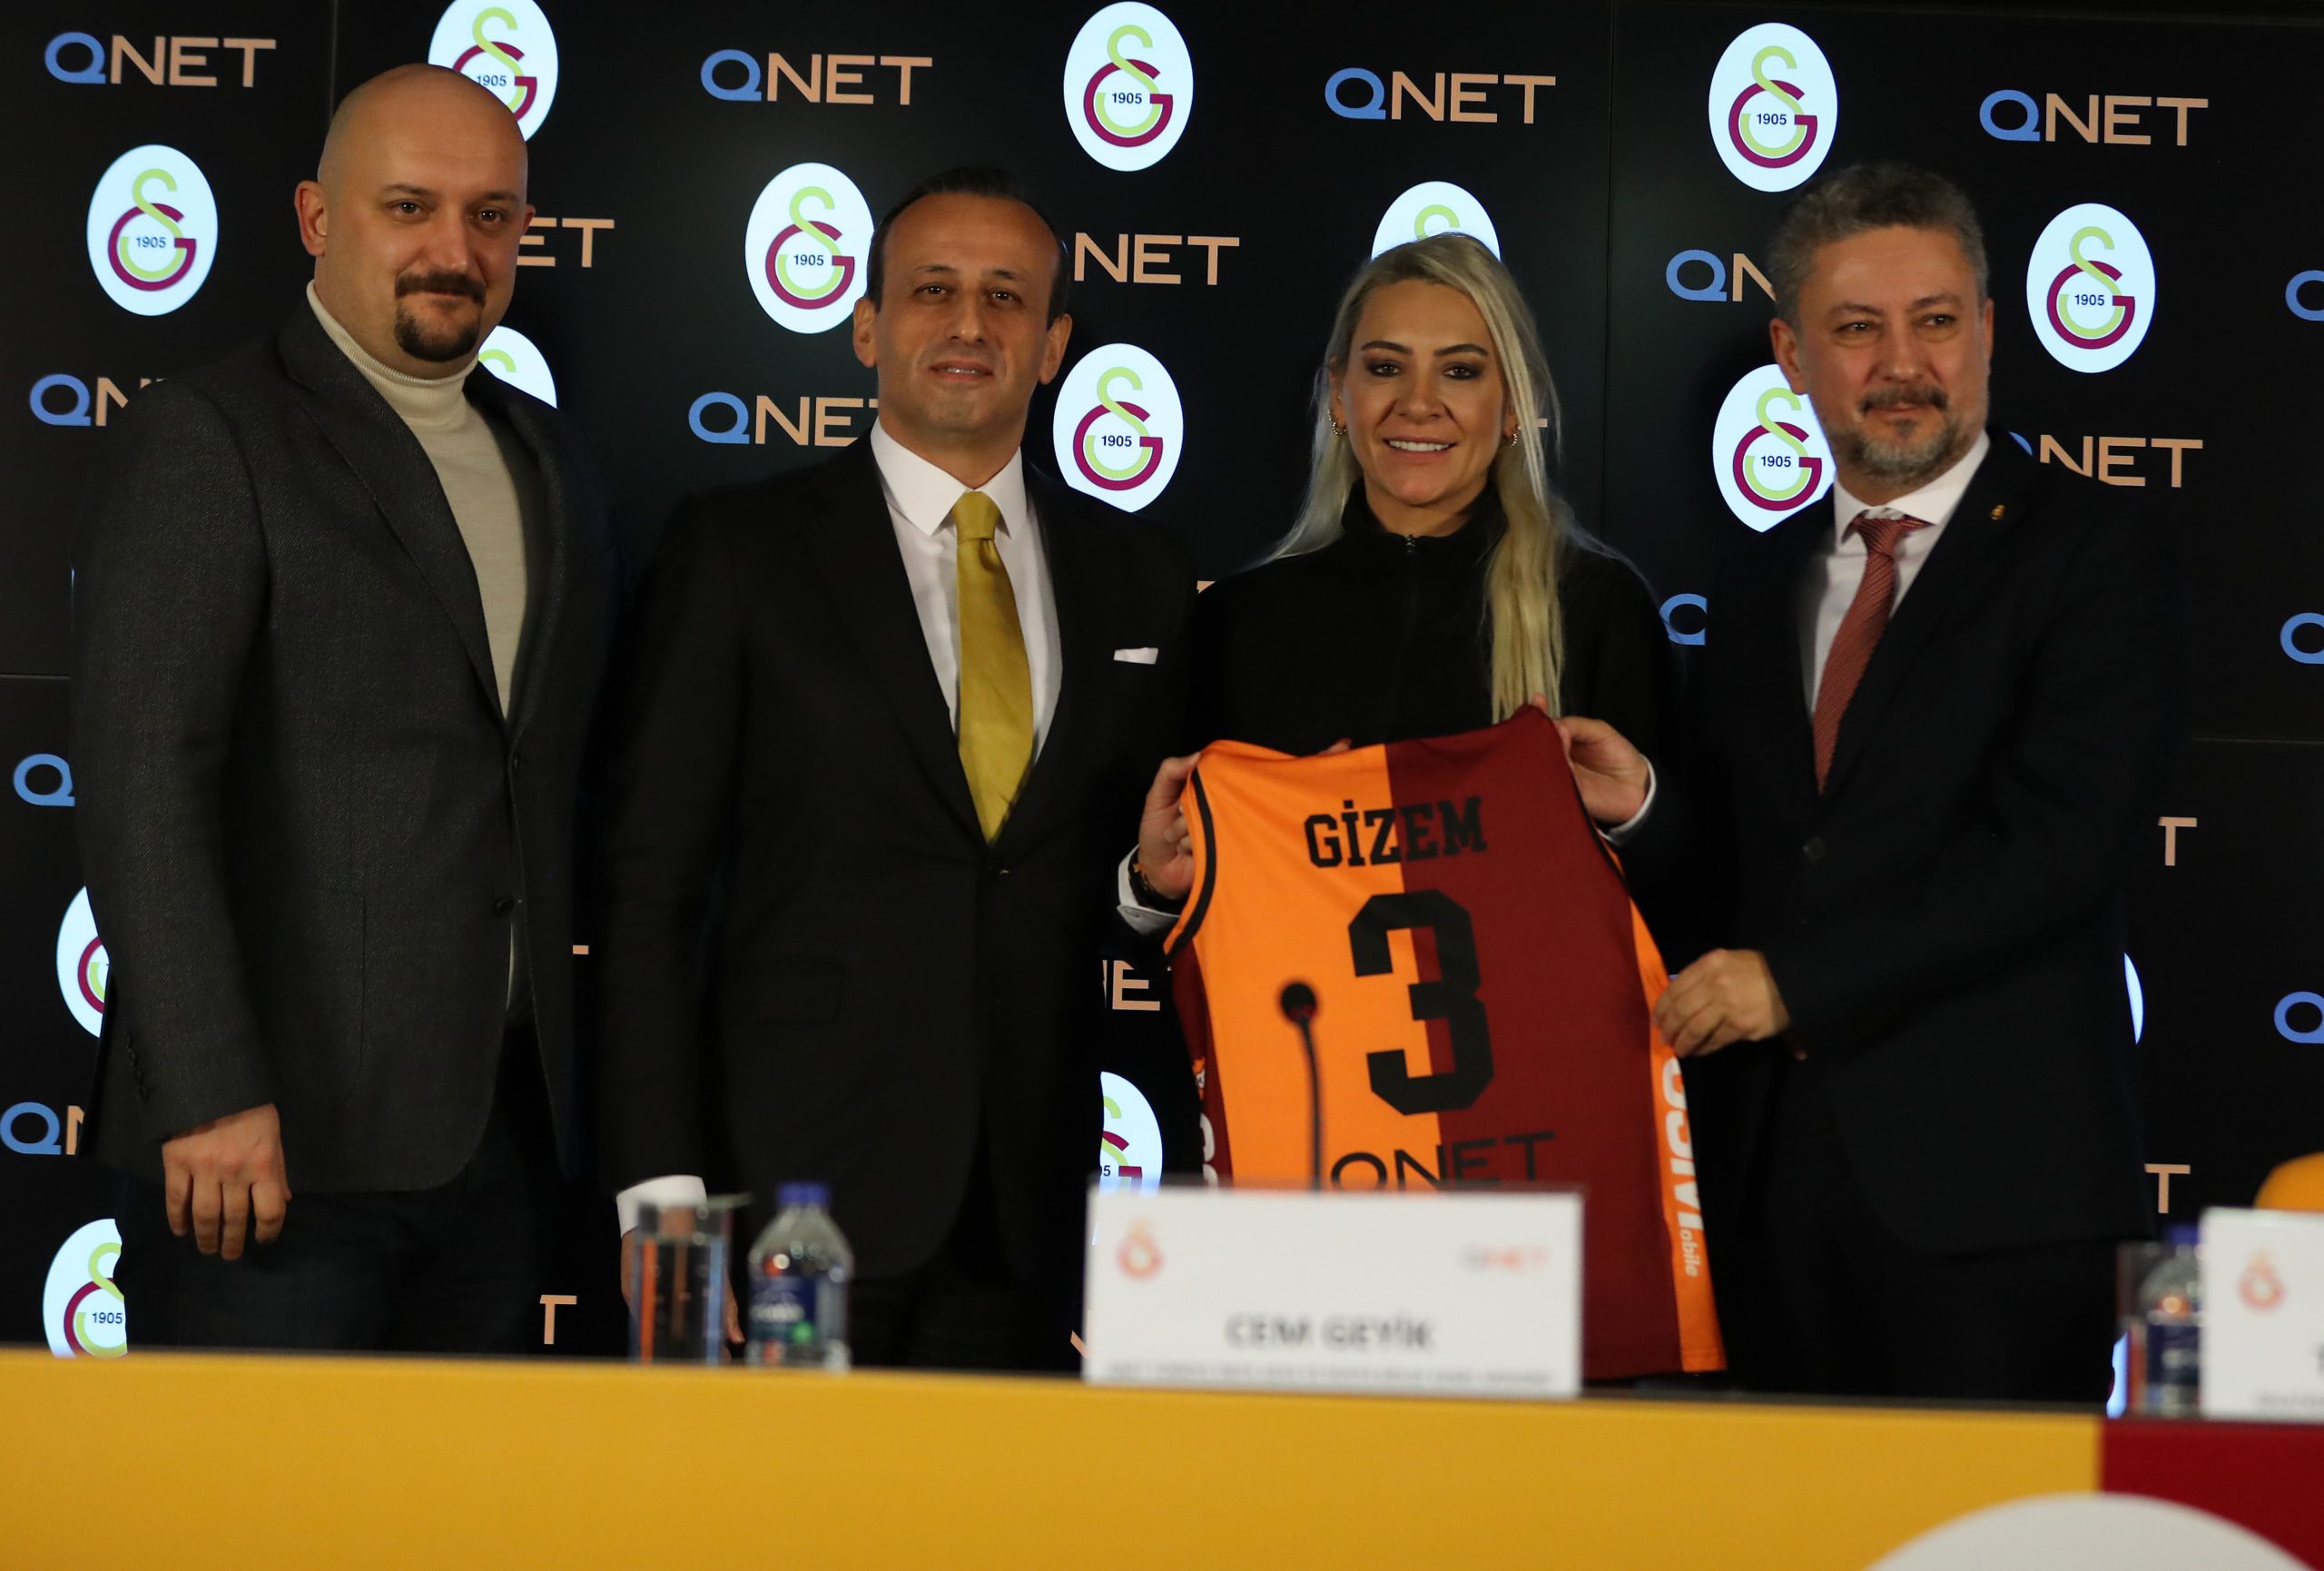 Qnet’ten Galatasaray’a sponsor oldu